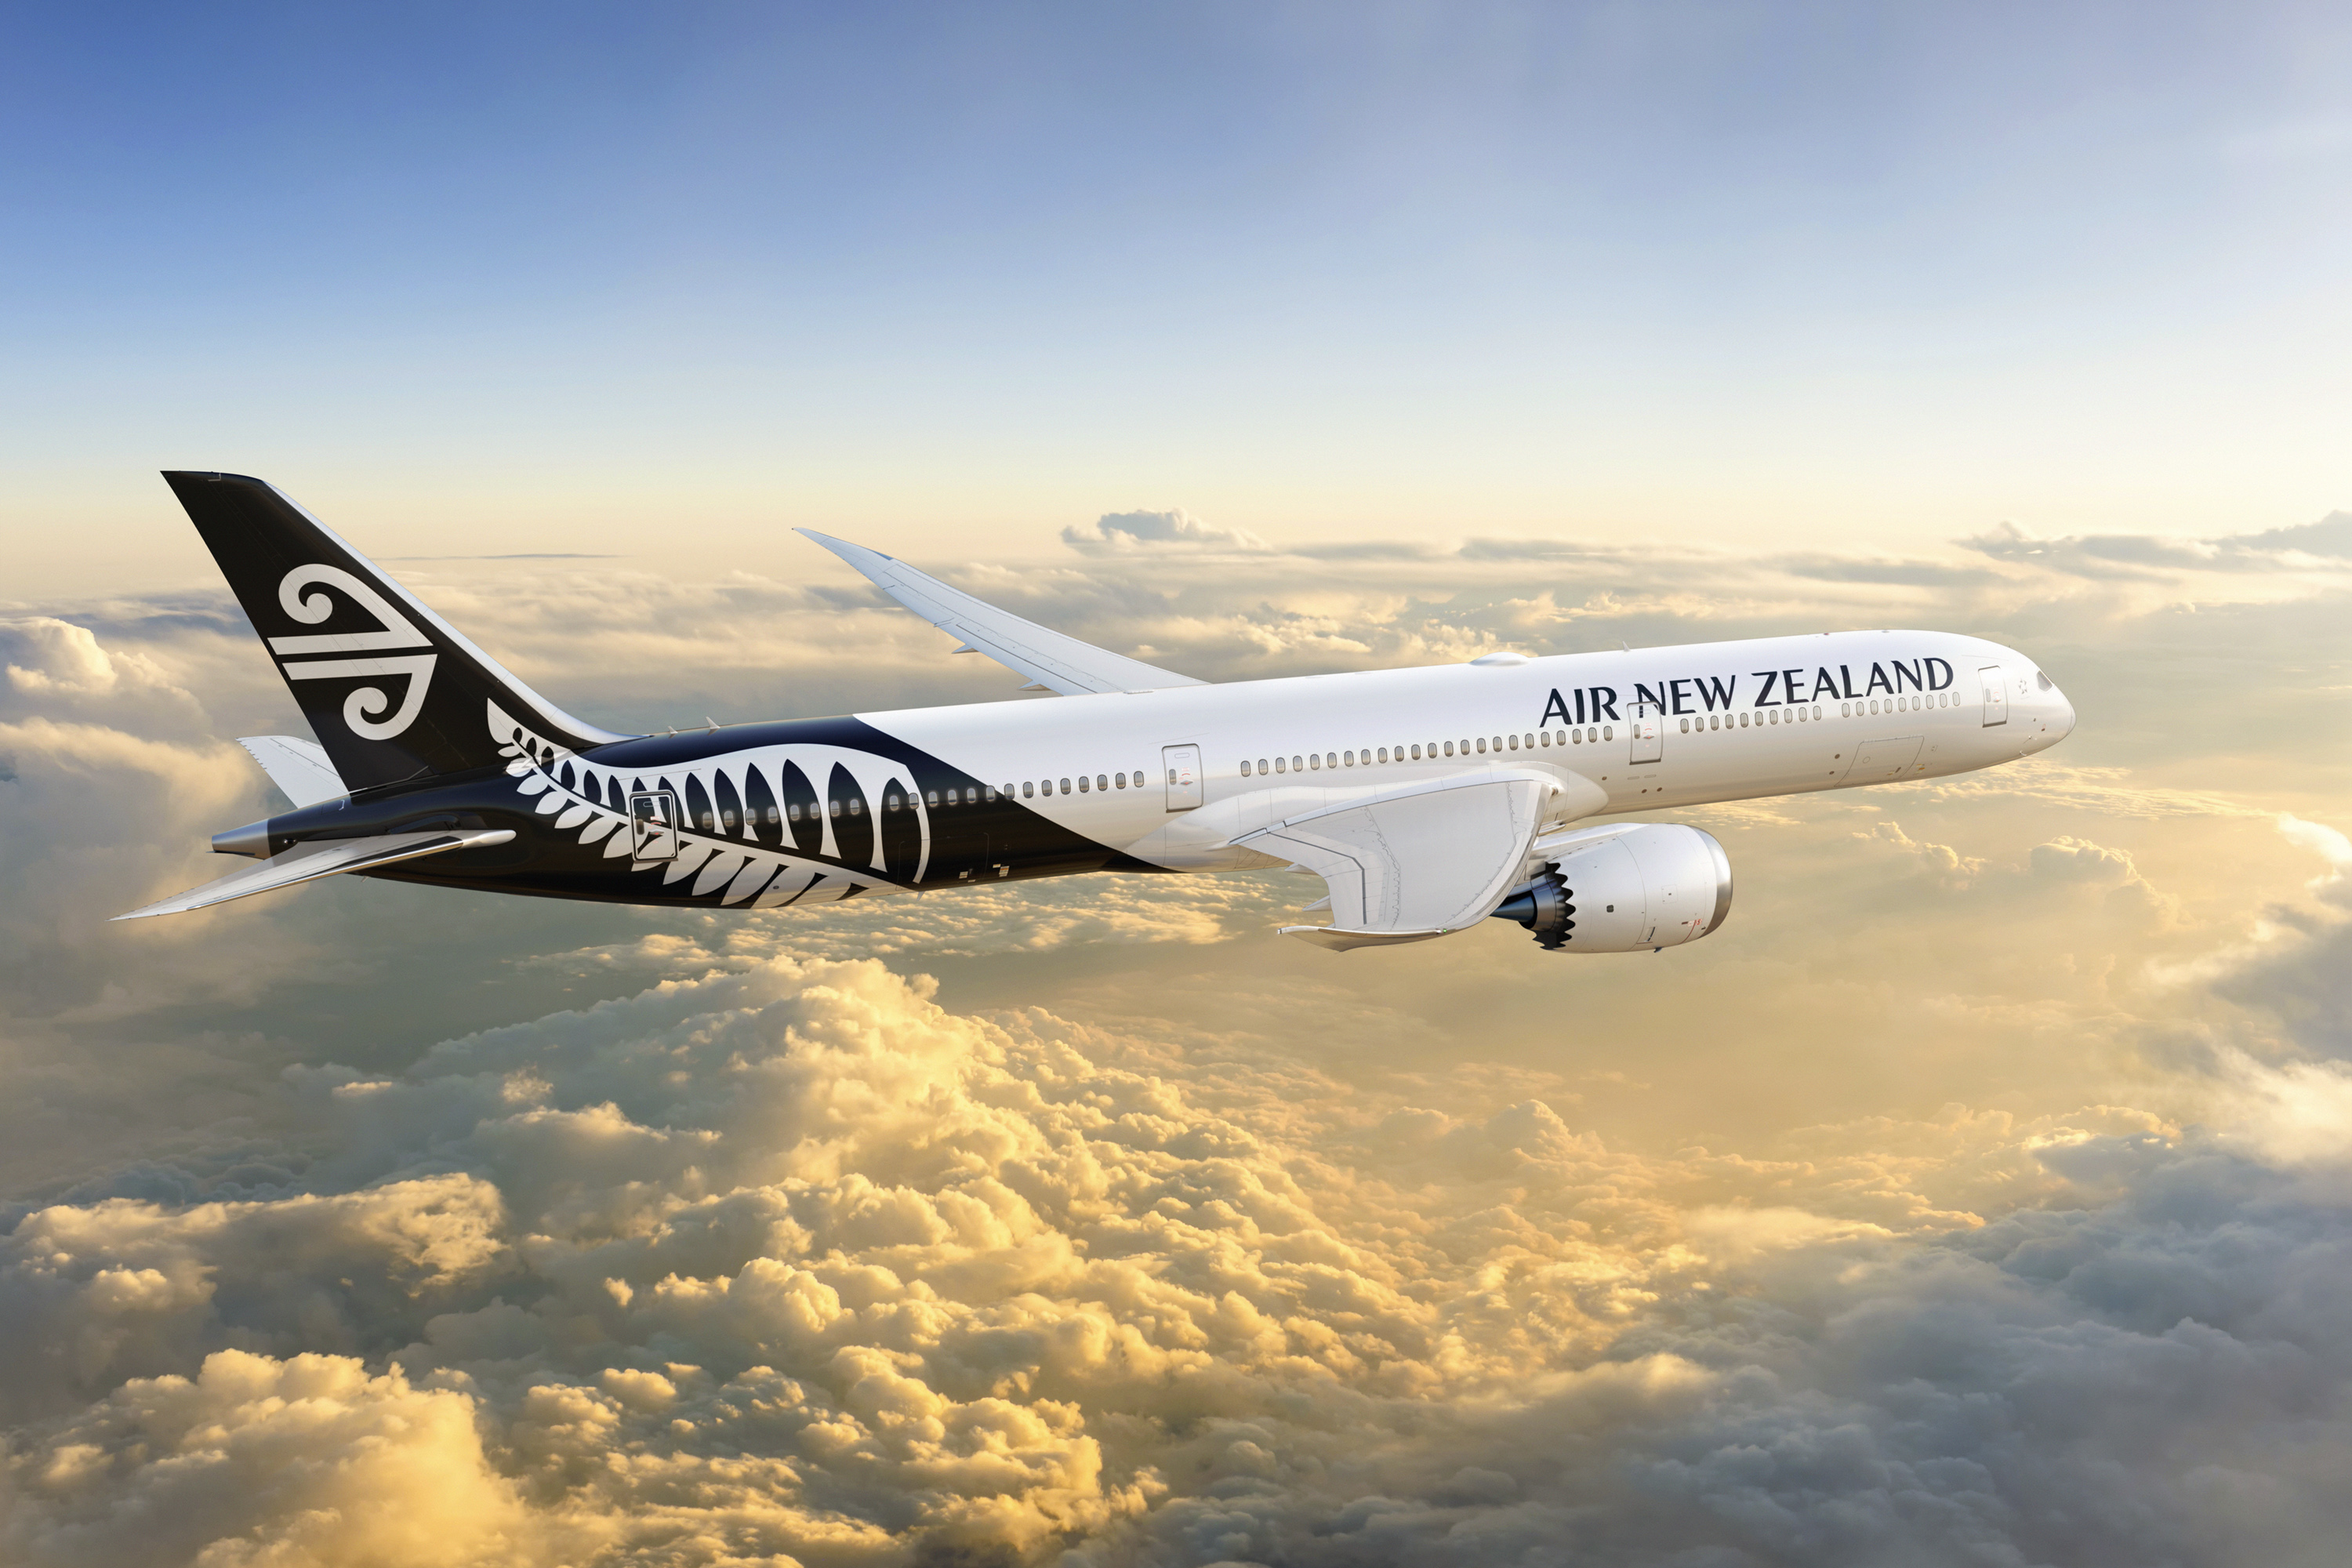 Air new zealand. Самолёт Боинг 787 Air newzeland. Boeing 787-9 Air New Zealand. Air New Zealand авиакомпания. Air New Zealand Дримлайнер.